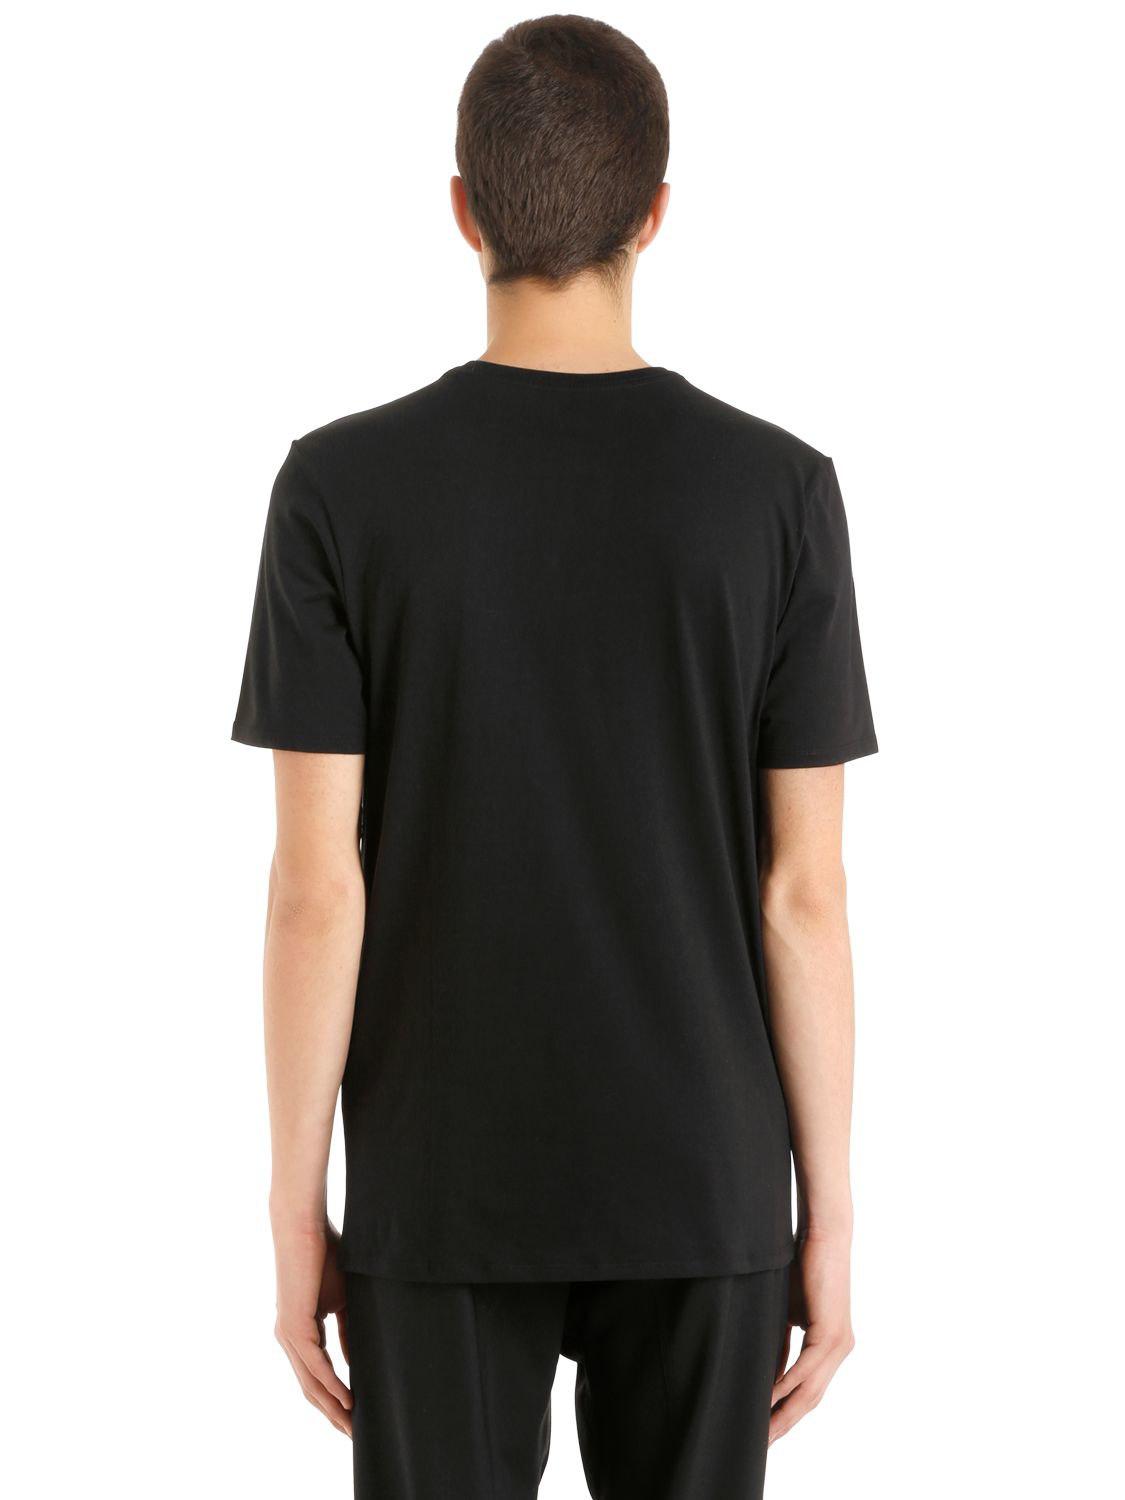 Nike Jordan X Gatorade Like Mike T-shirt in Black for Men - Lyst